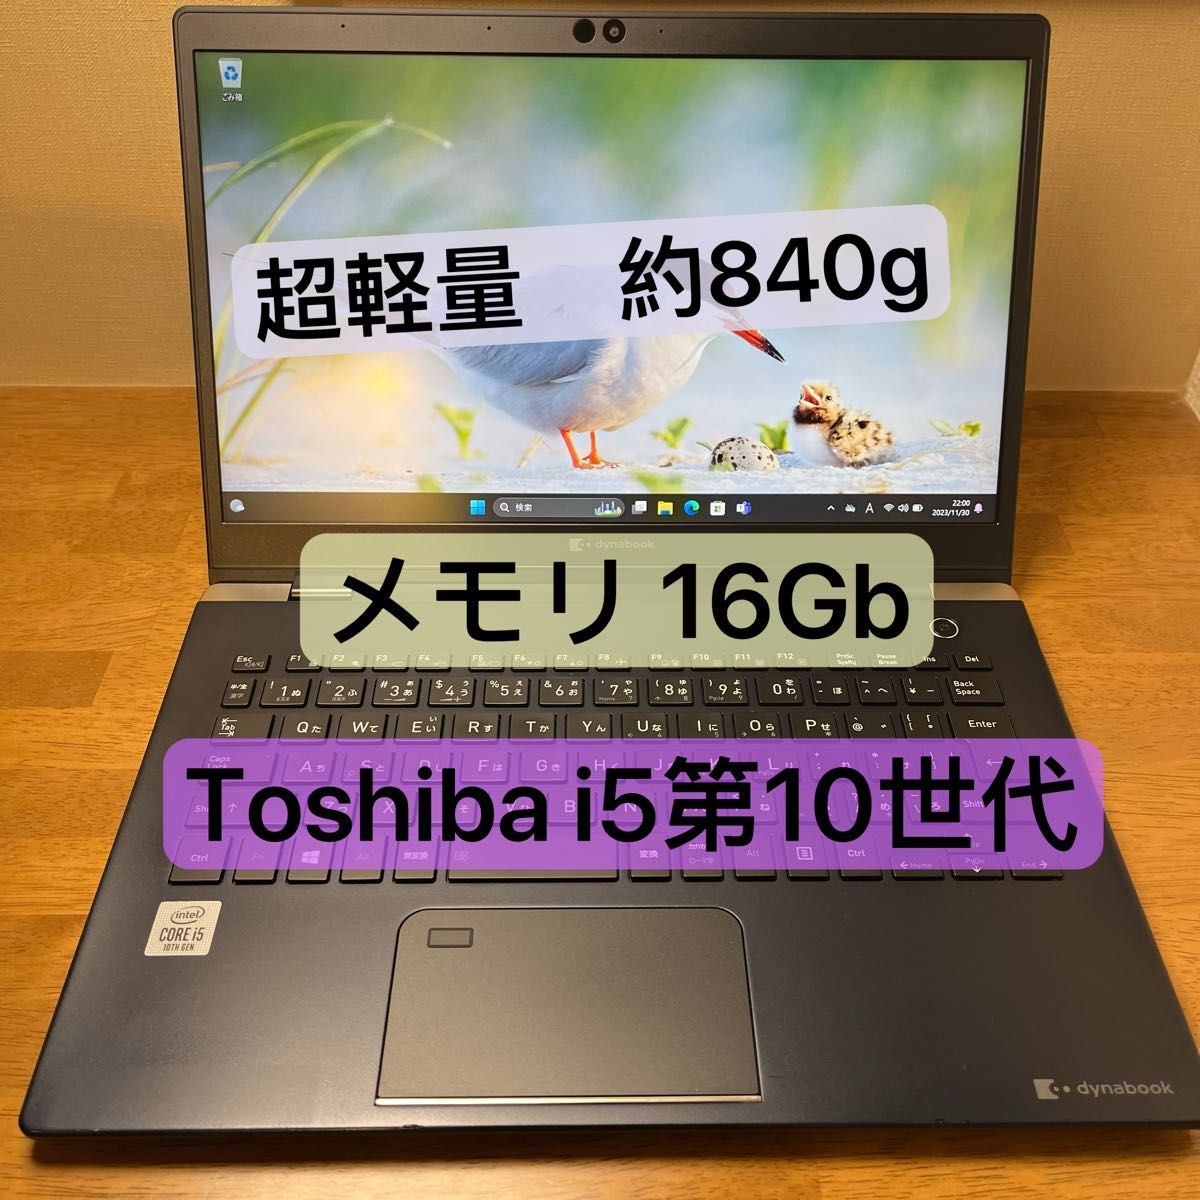 Toshiba dynabook G83/FP i5第10世代 16Gb 超軽量ノートPC